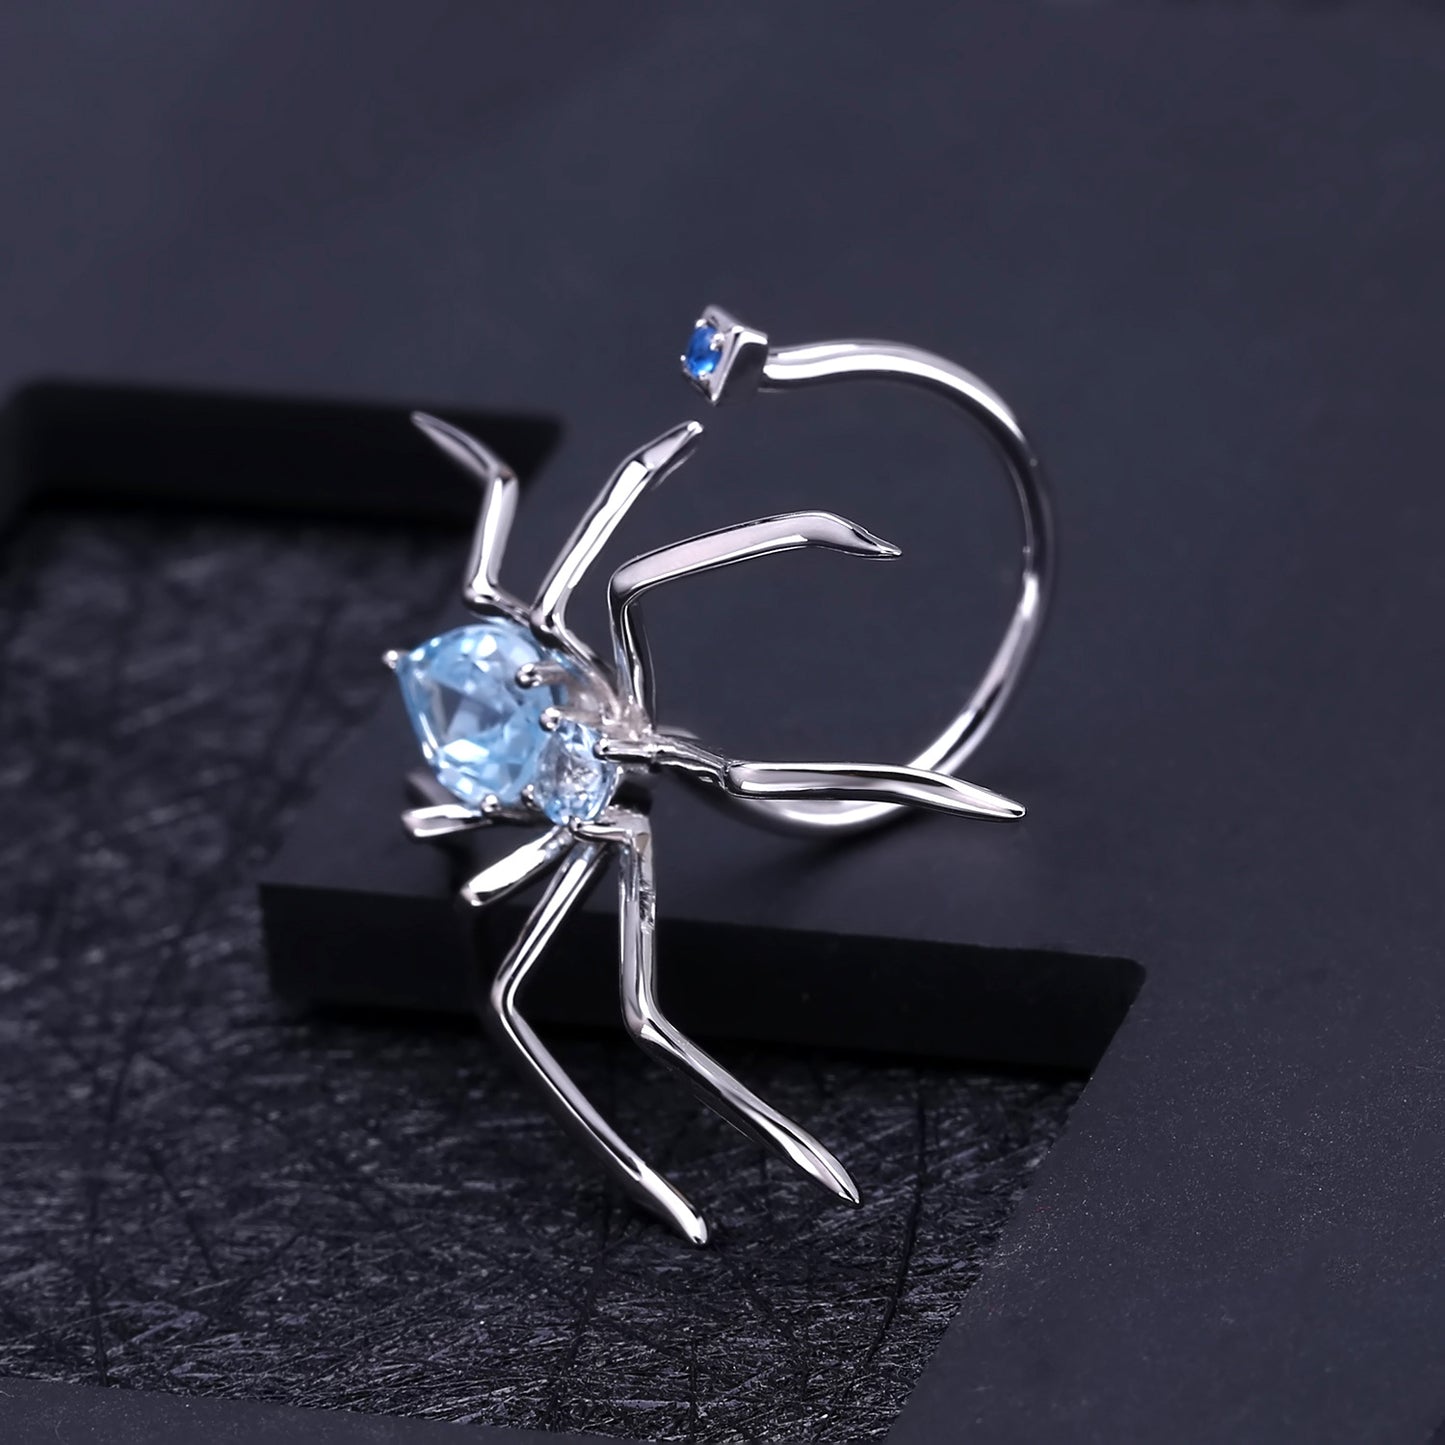 Spider Design Natural Gemstones Opening Silver Ring